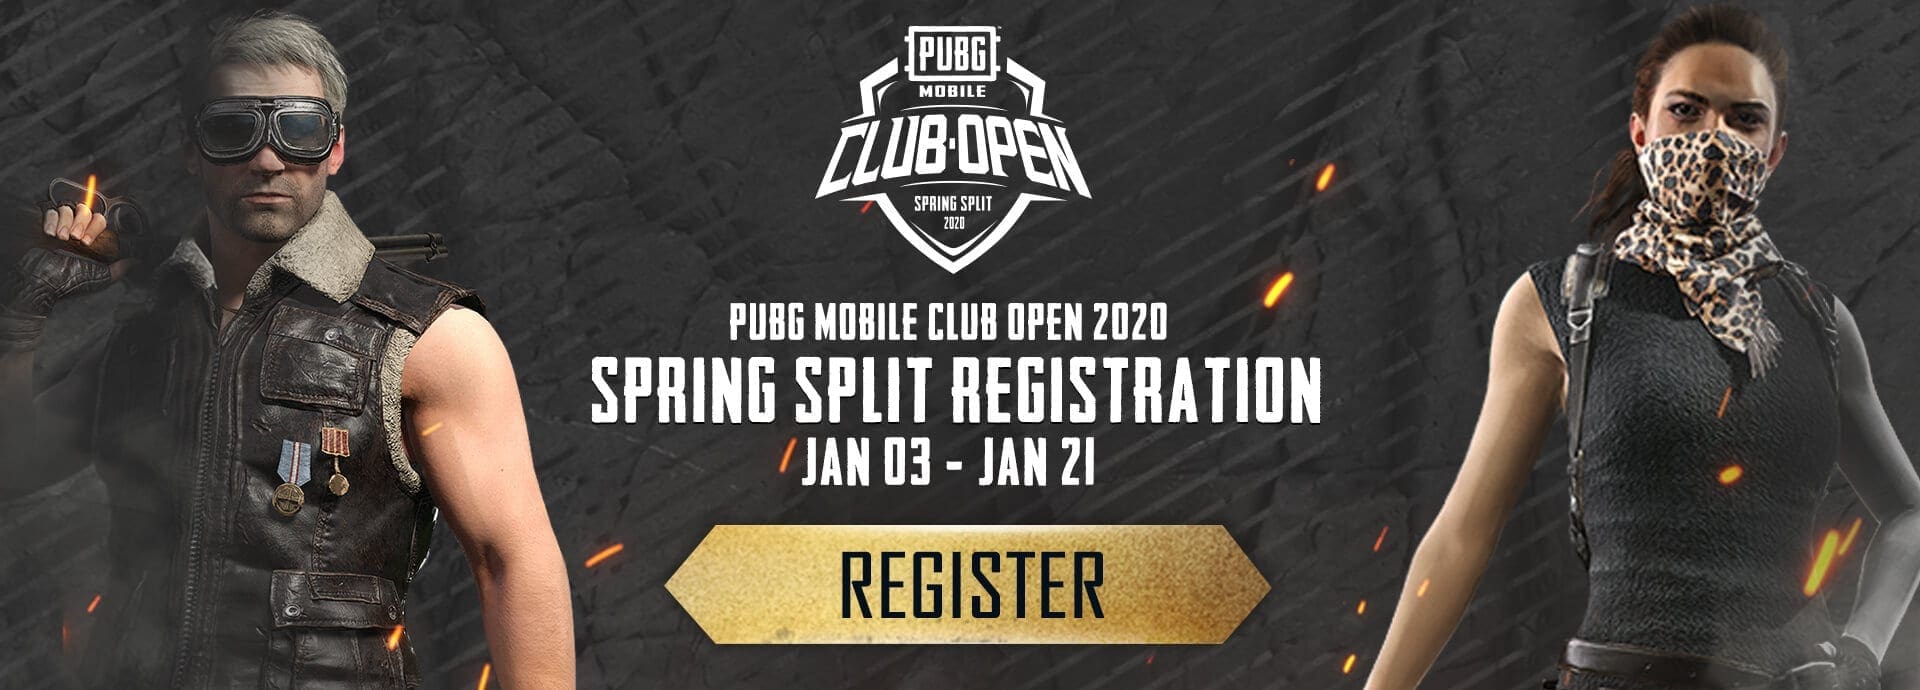 PUBG Mobile Open Registration for PMCO 2020 Spring Split - Esport Bet